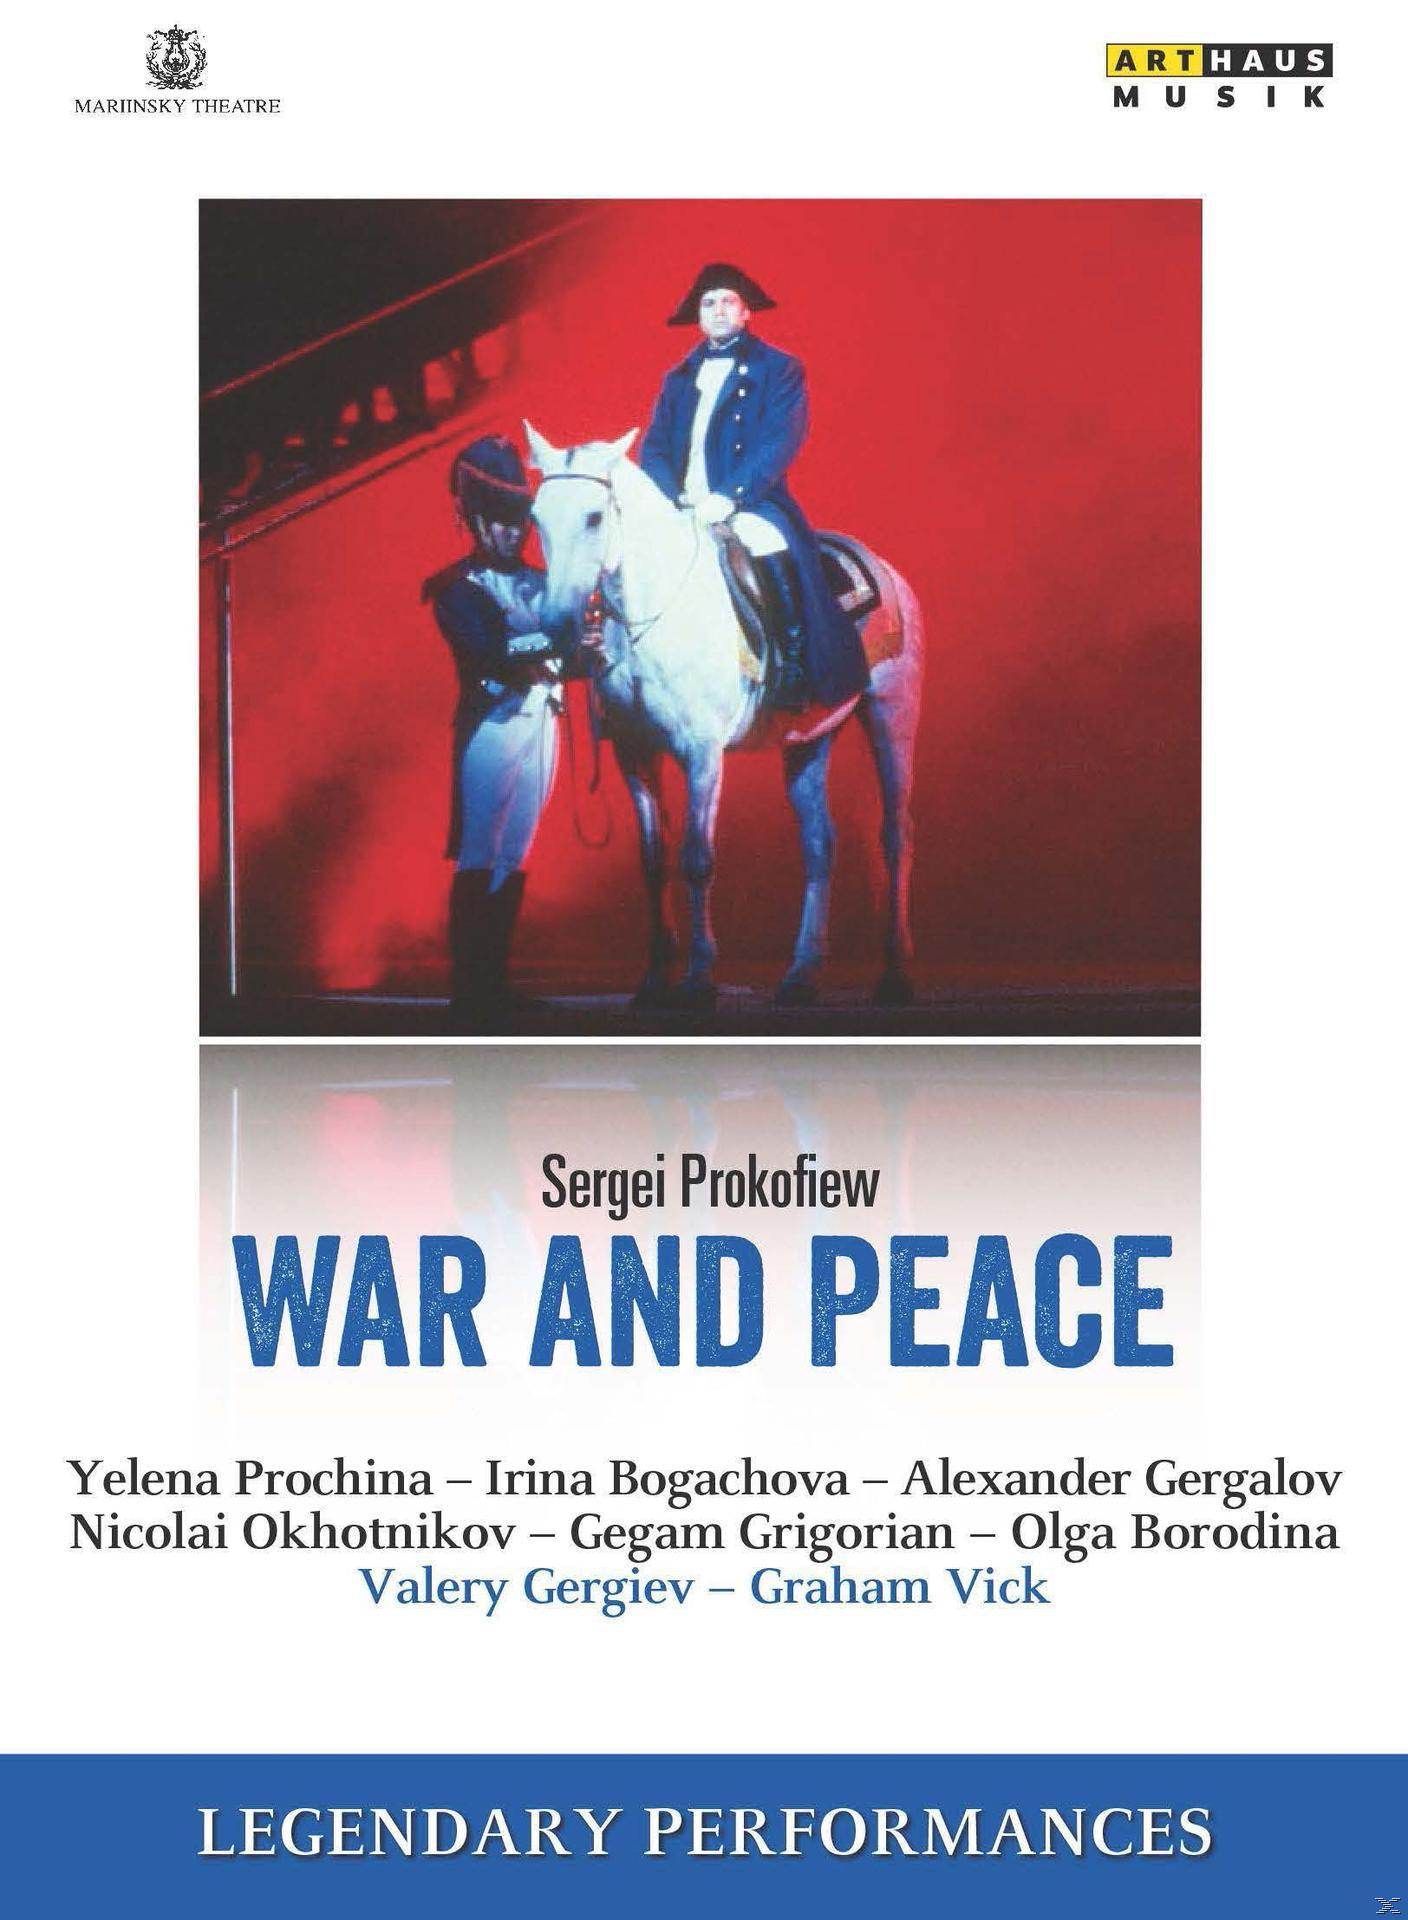 Alexander Gergalov, Elena Prokina, Gegam - Olga Und Kirov - Borodina, Grigorian, (DVD) Vassily Gerelo, Krieg Orchestra Frieden